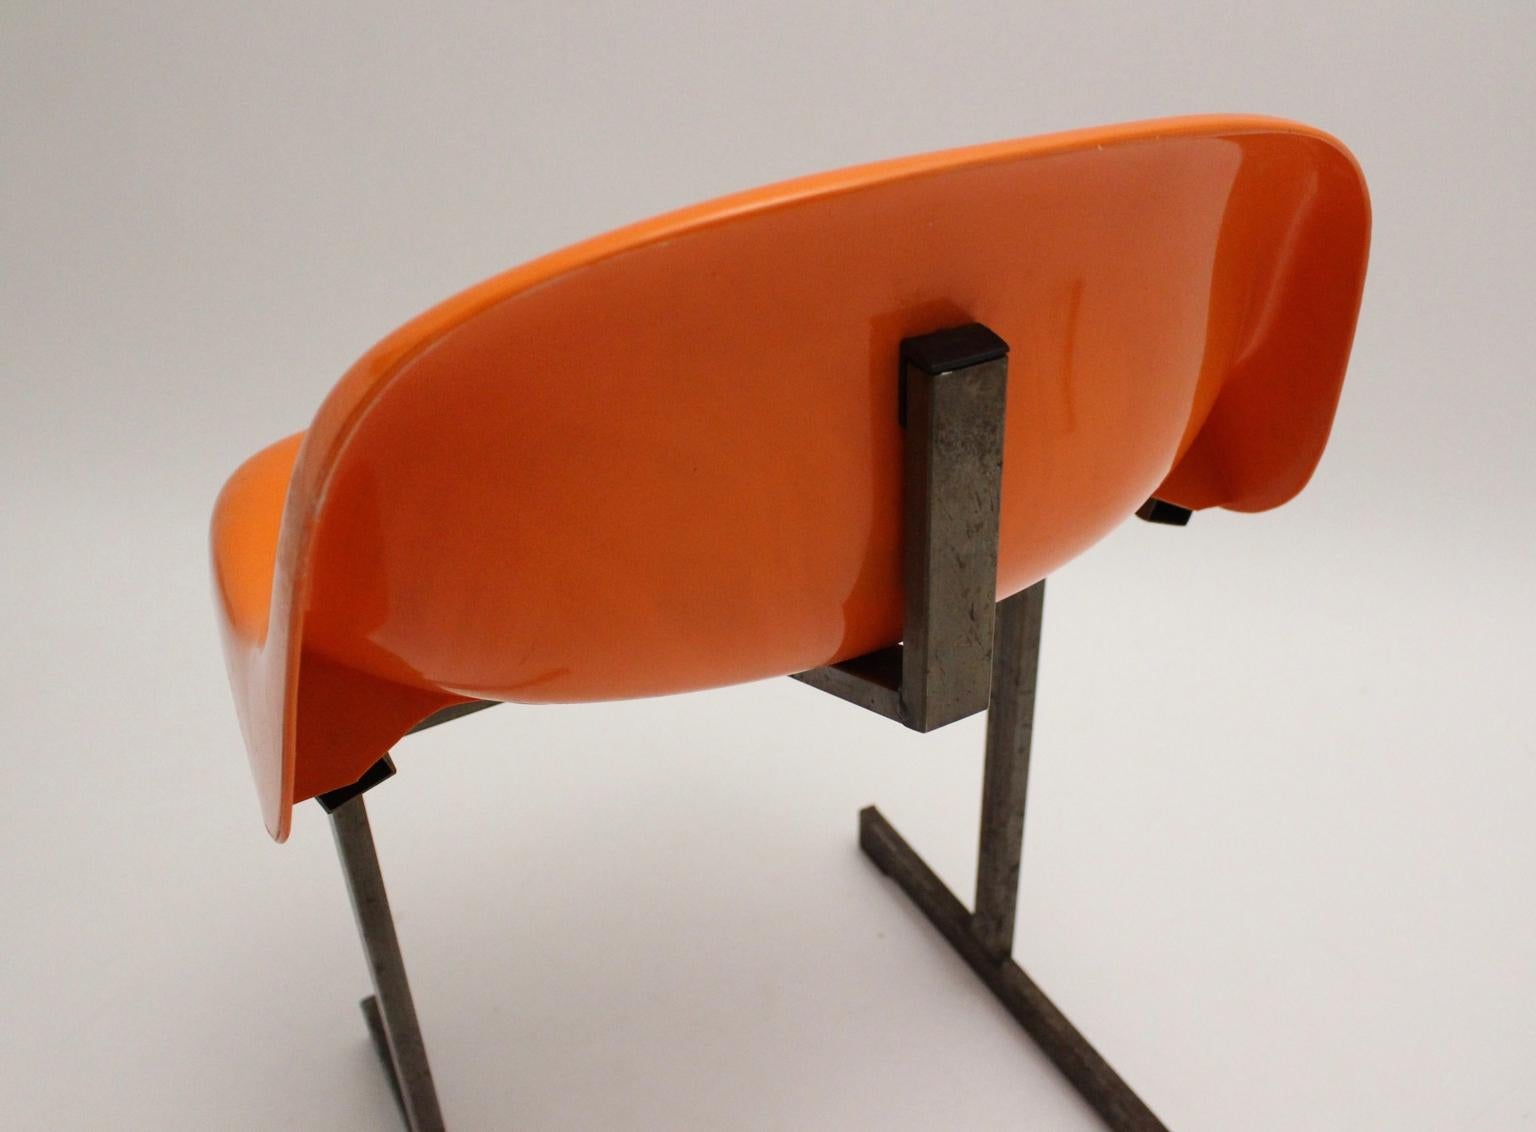 Space Age Vintage Orange Plastic Metal Chair 1970s For Sale 8